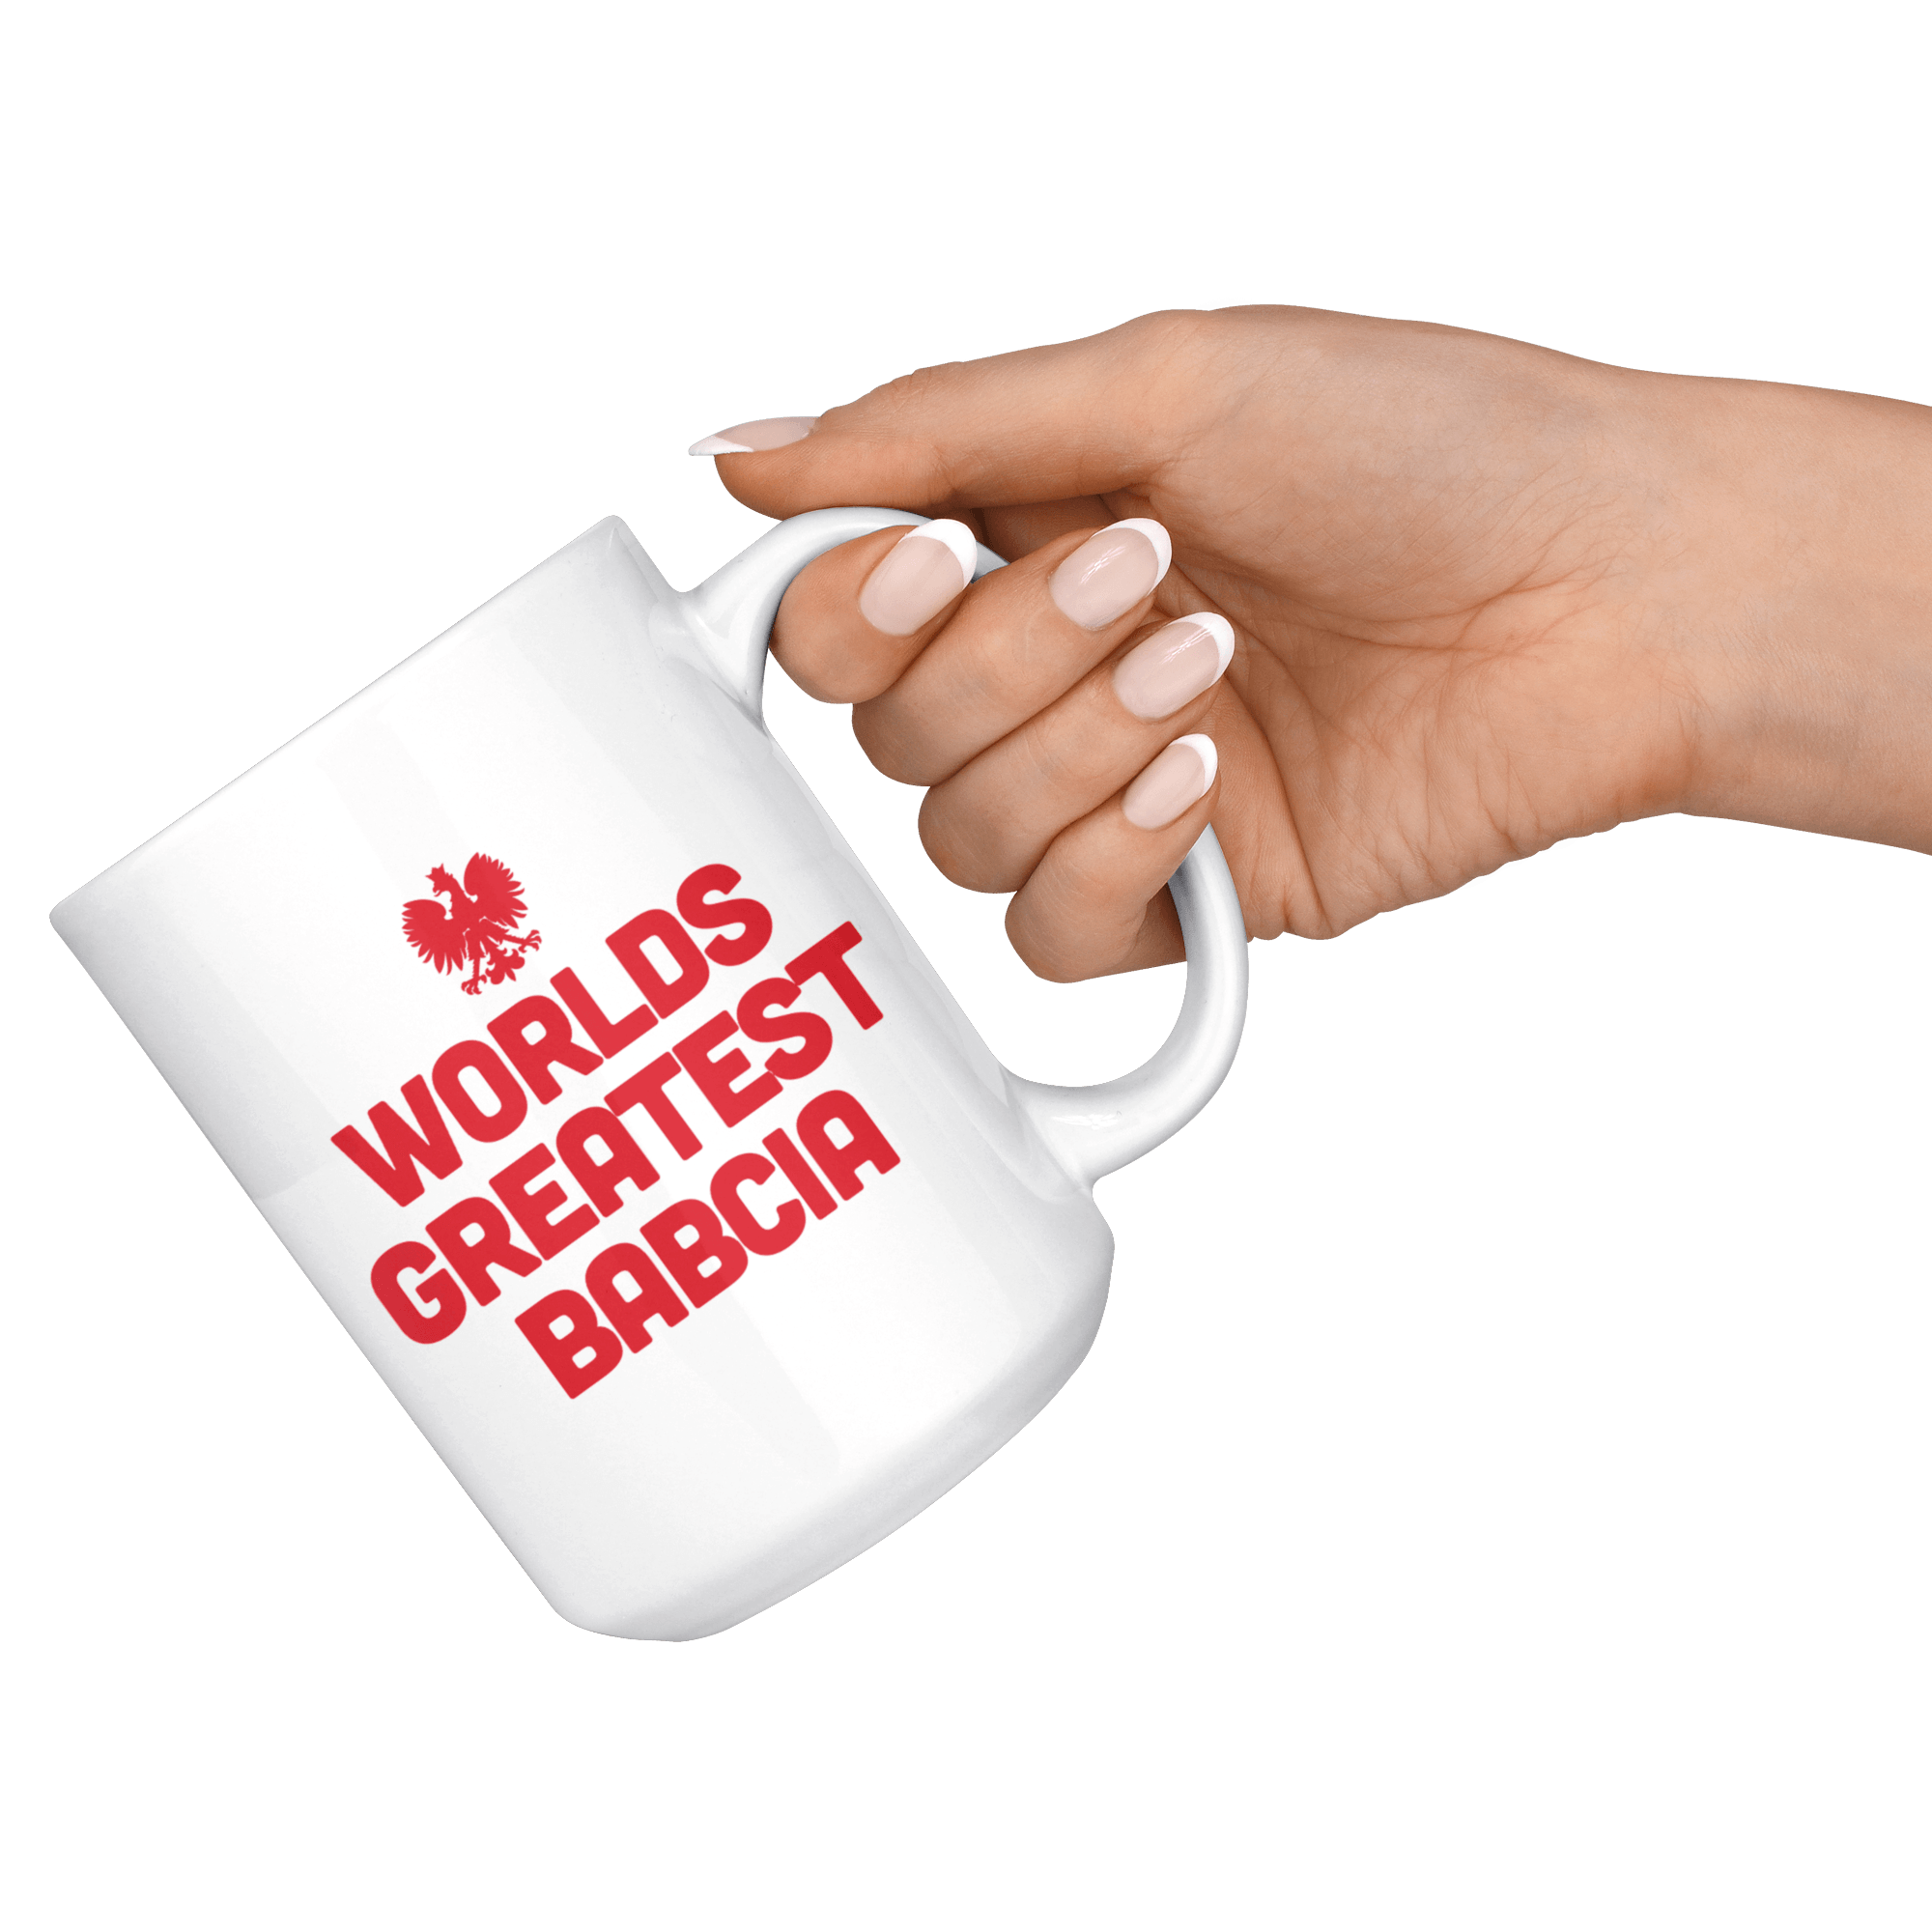 World's Greatest Babcia Coffee Mug Drinkware teelaunch   